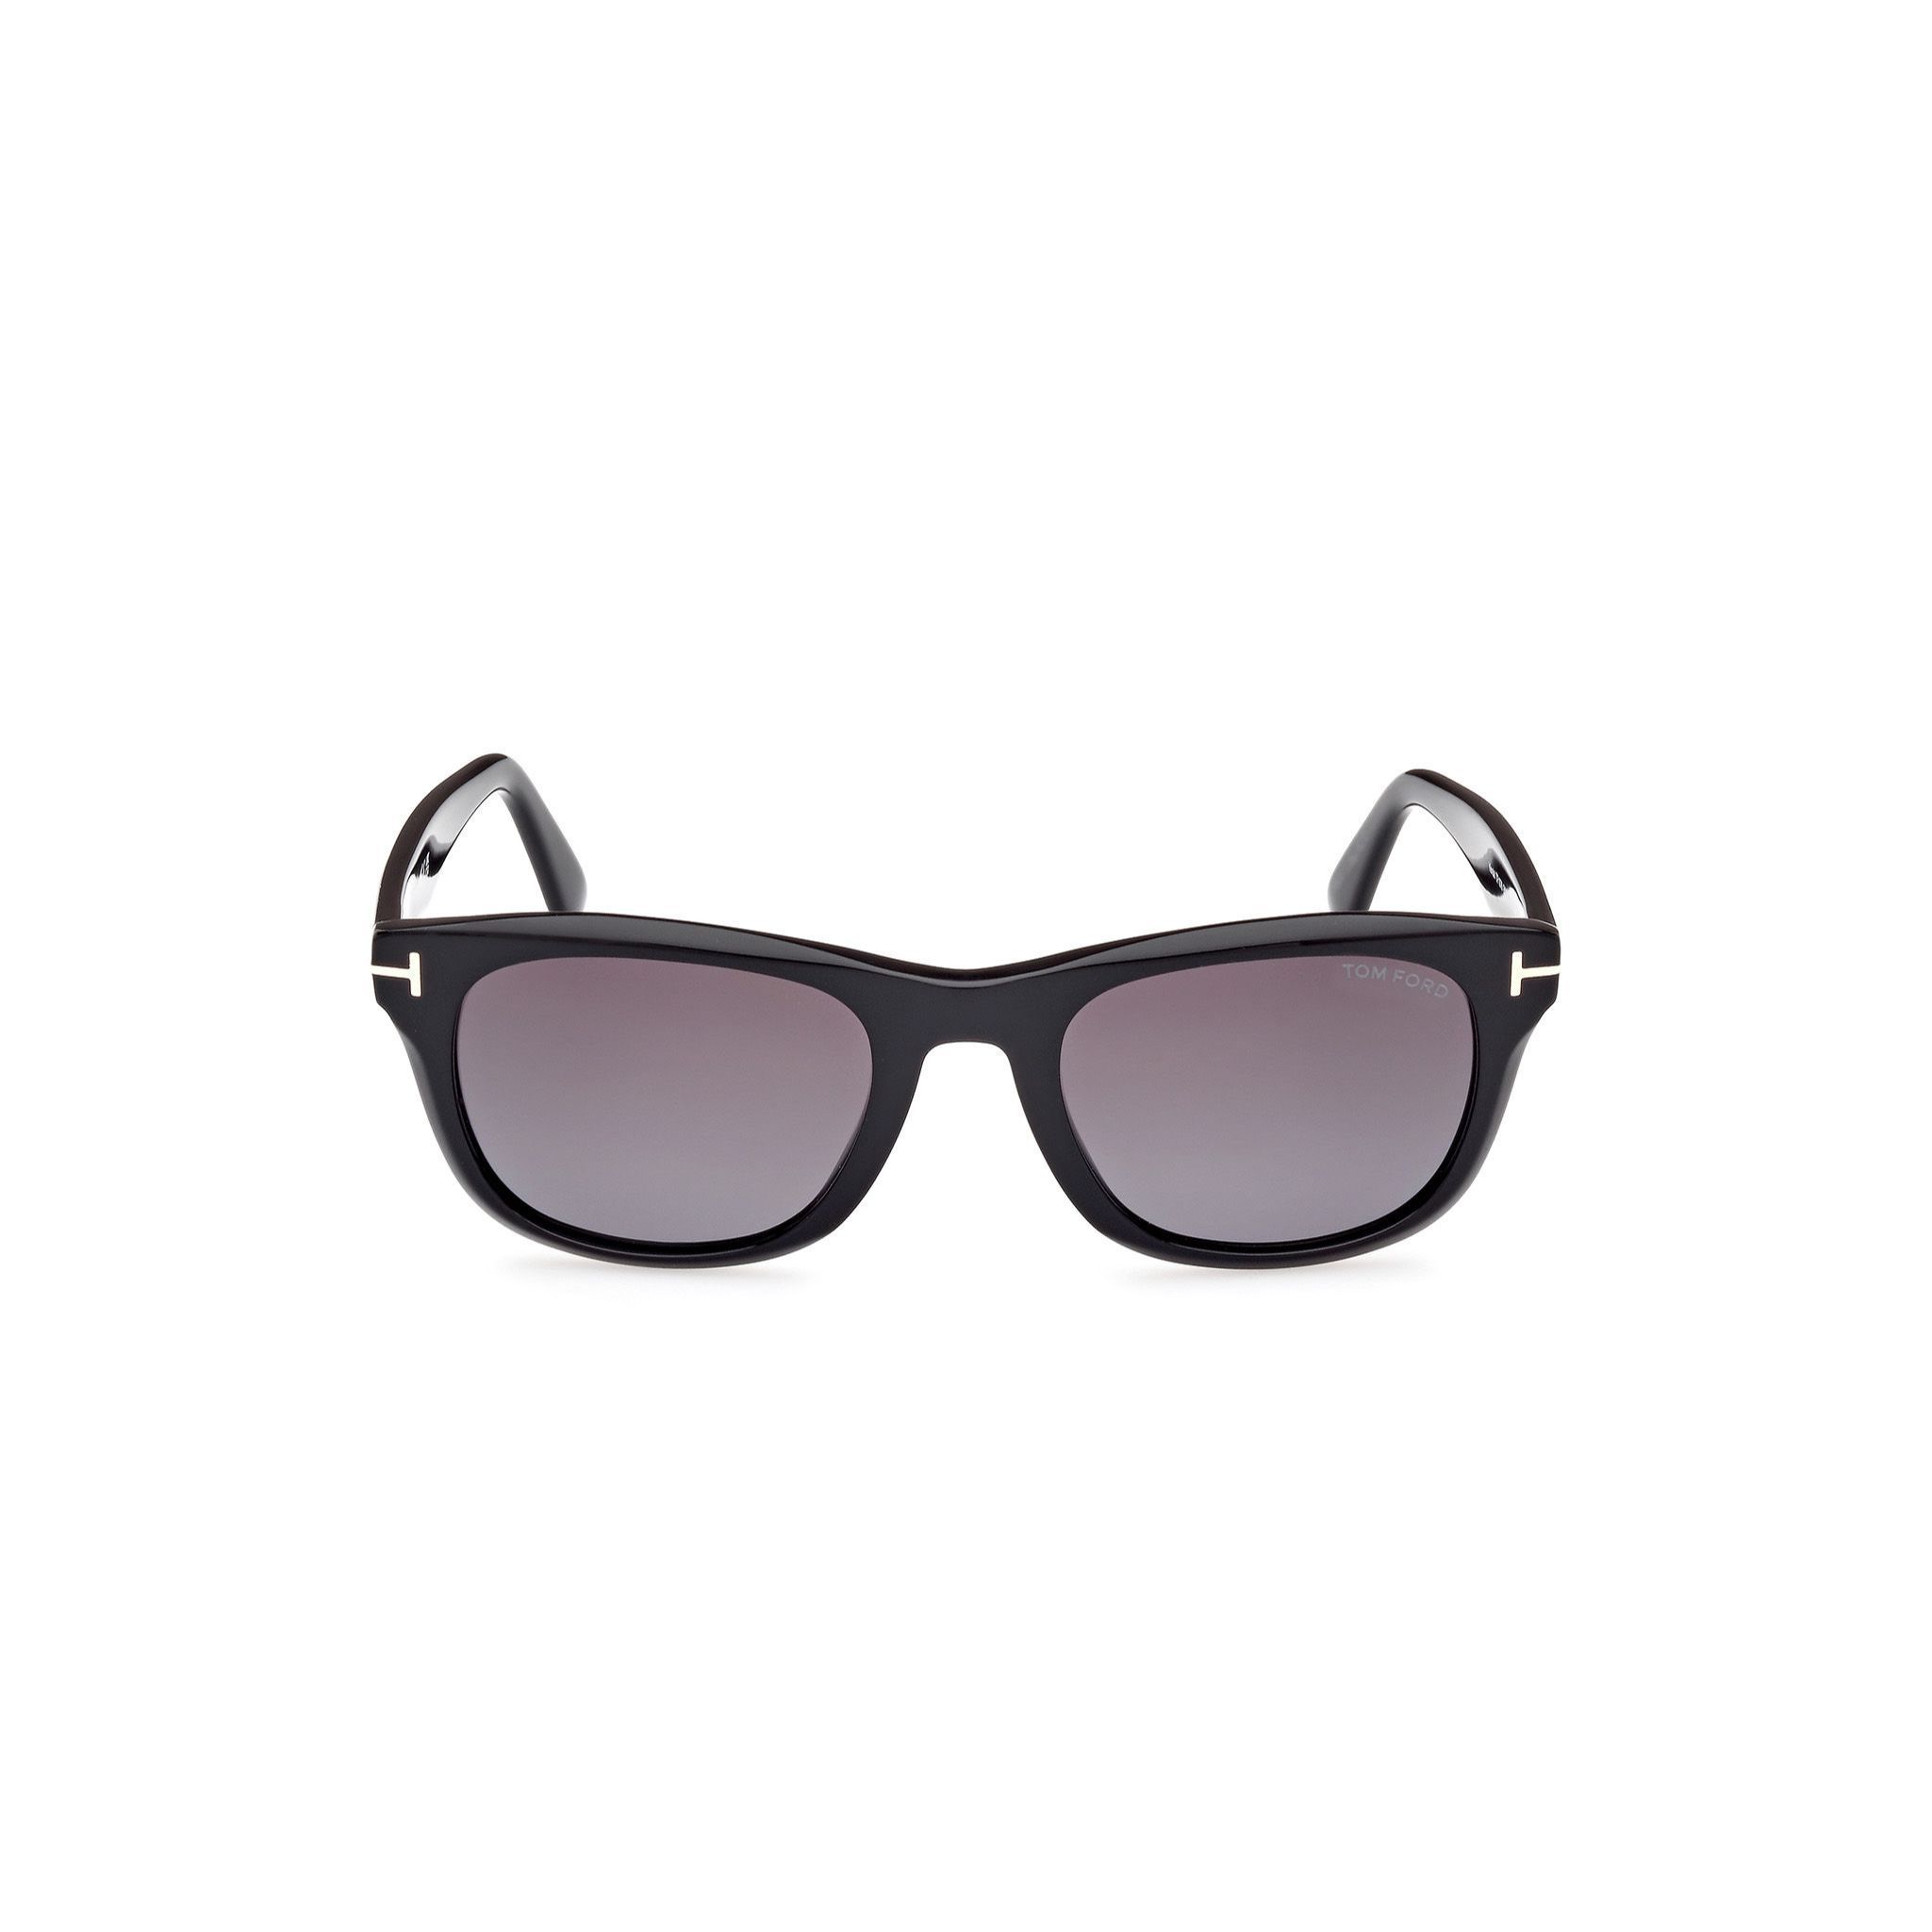 FT1076 Square Sunglasses 01B - size 54